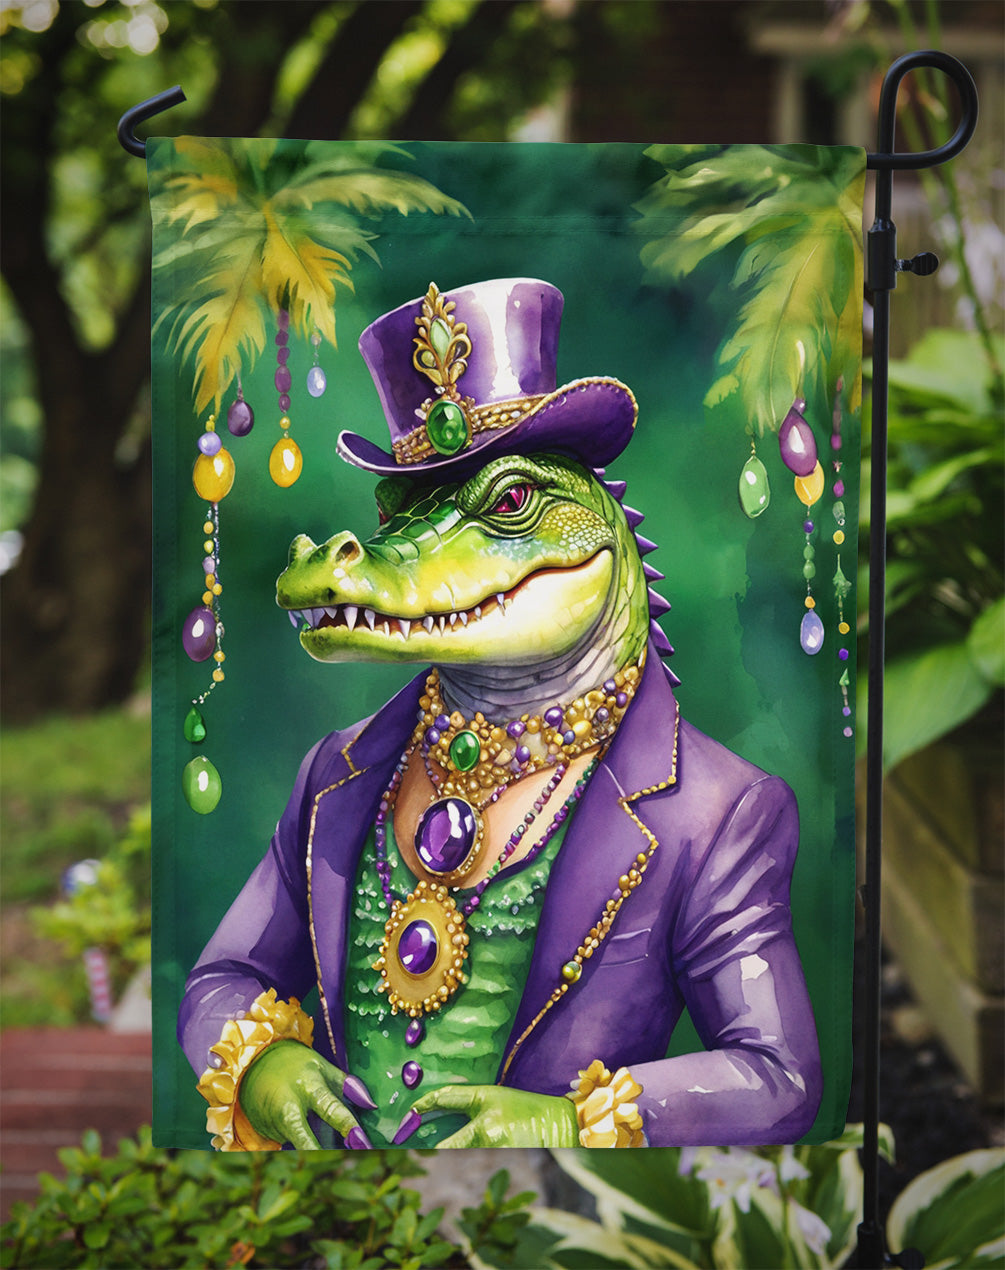 Alligator King of Mardi Gras Garden Flag